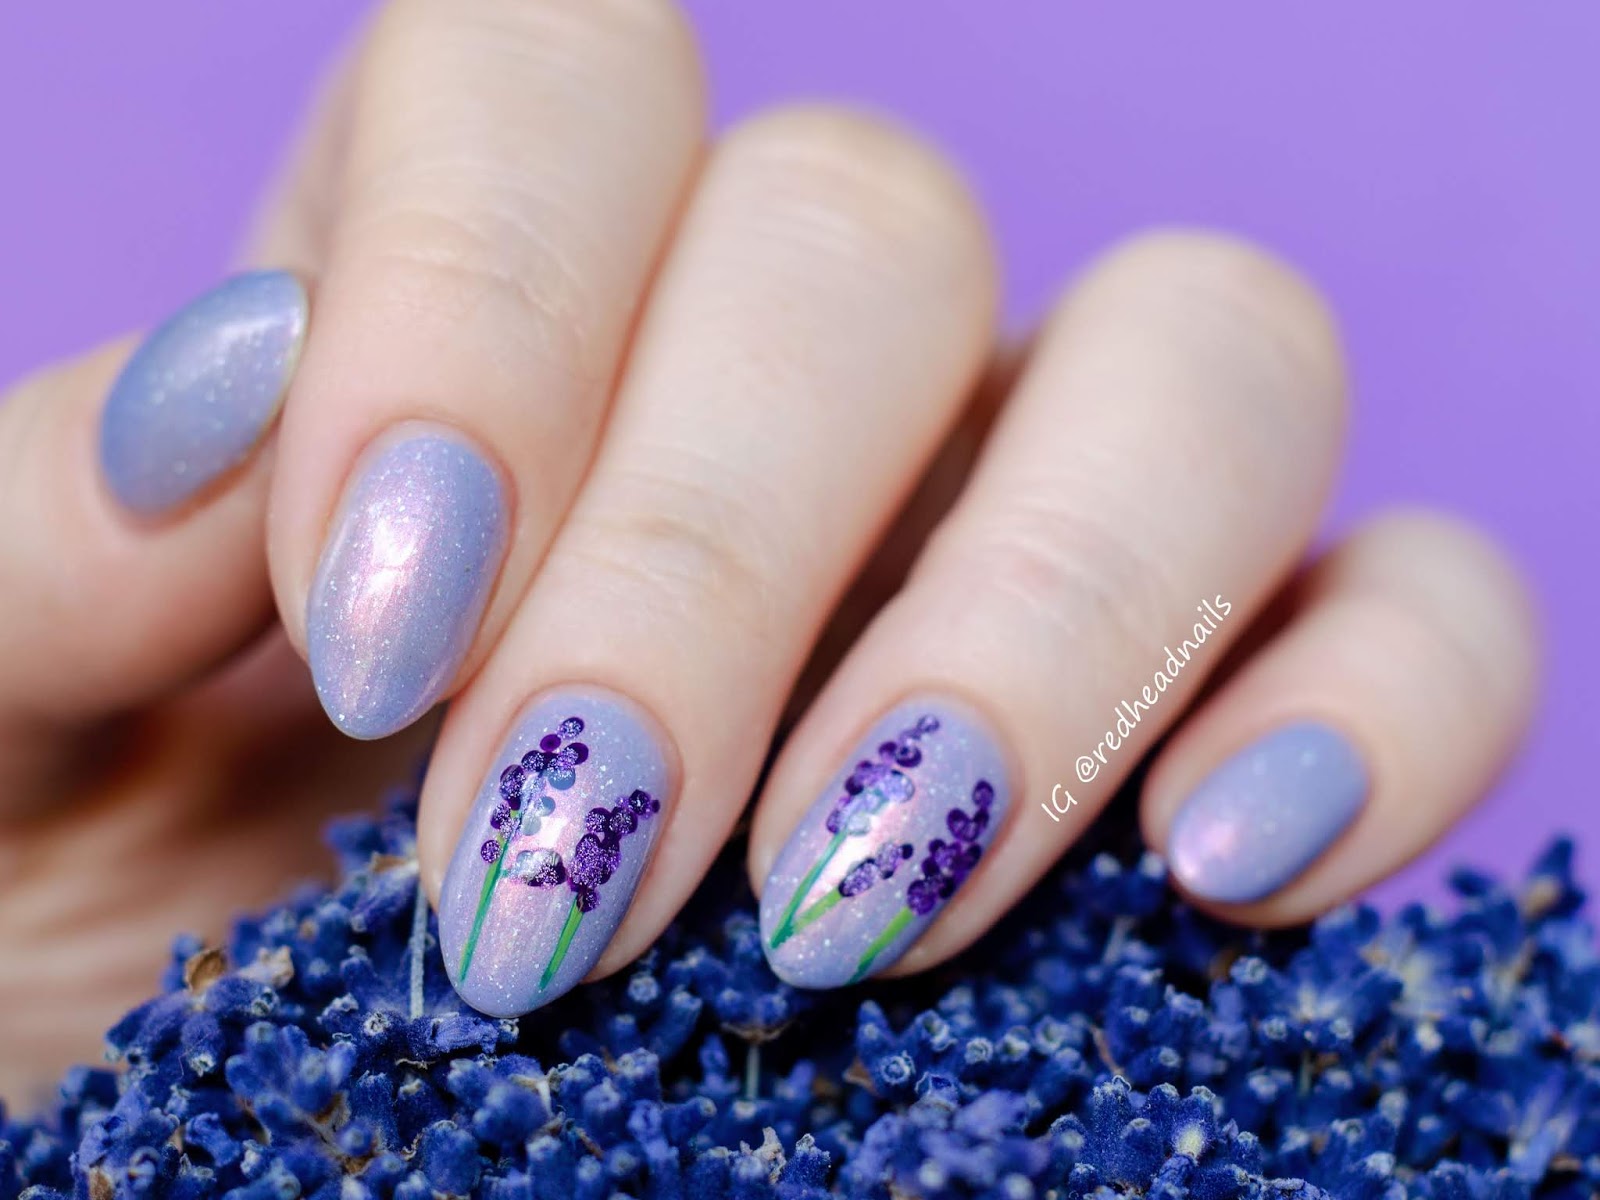 Lavender hand painted nail art